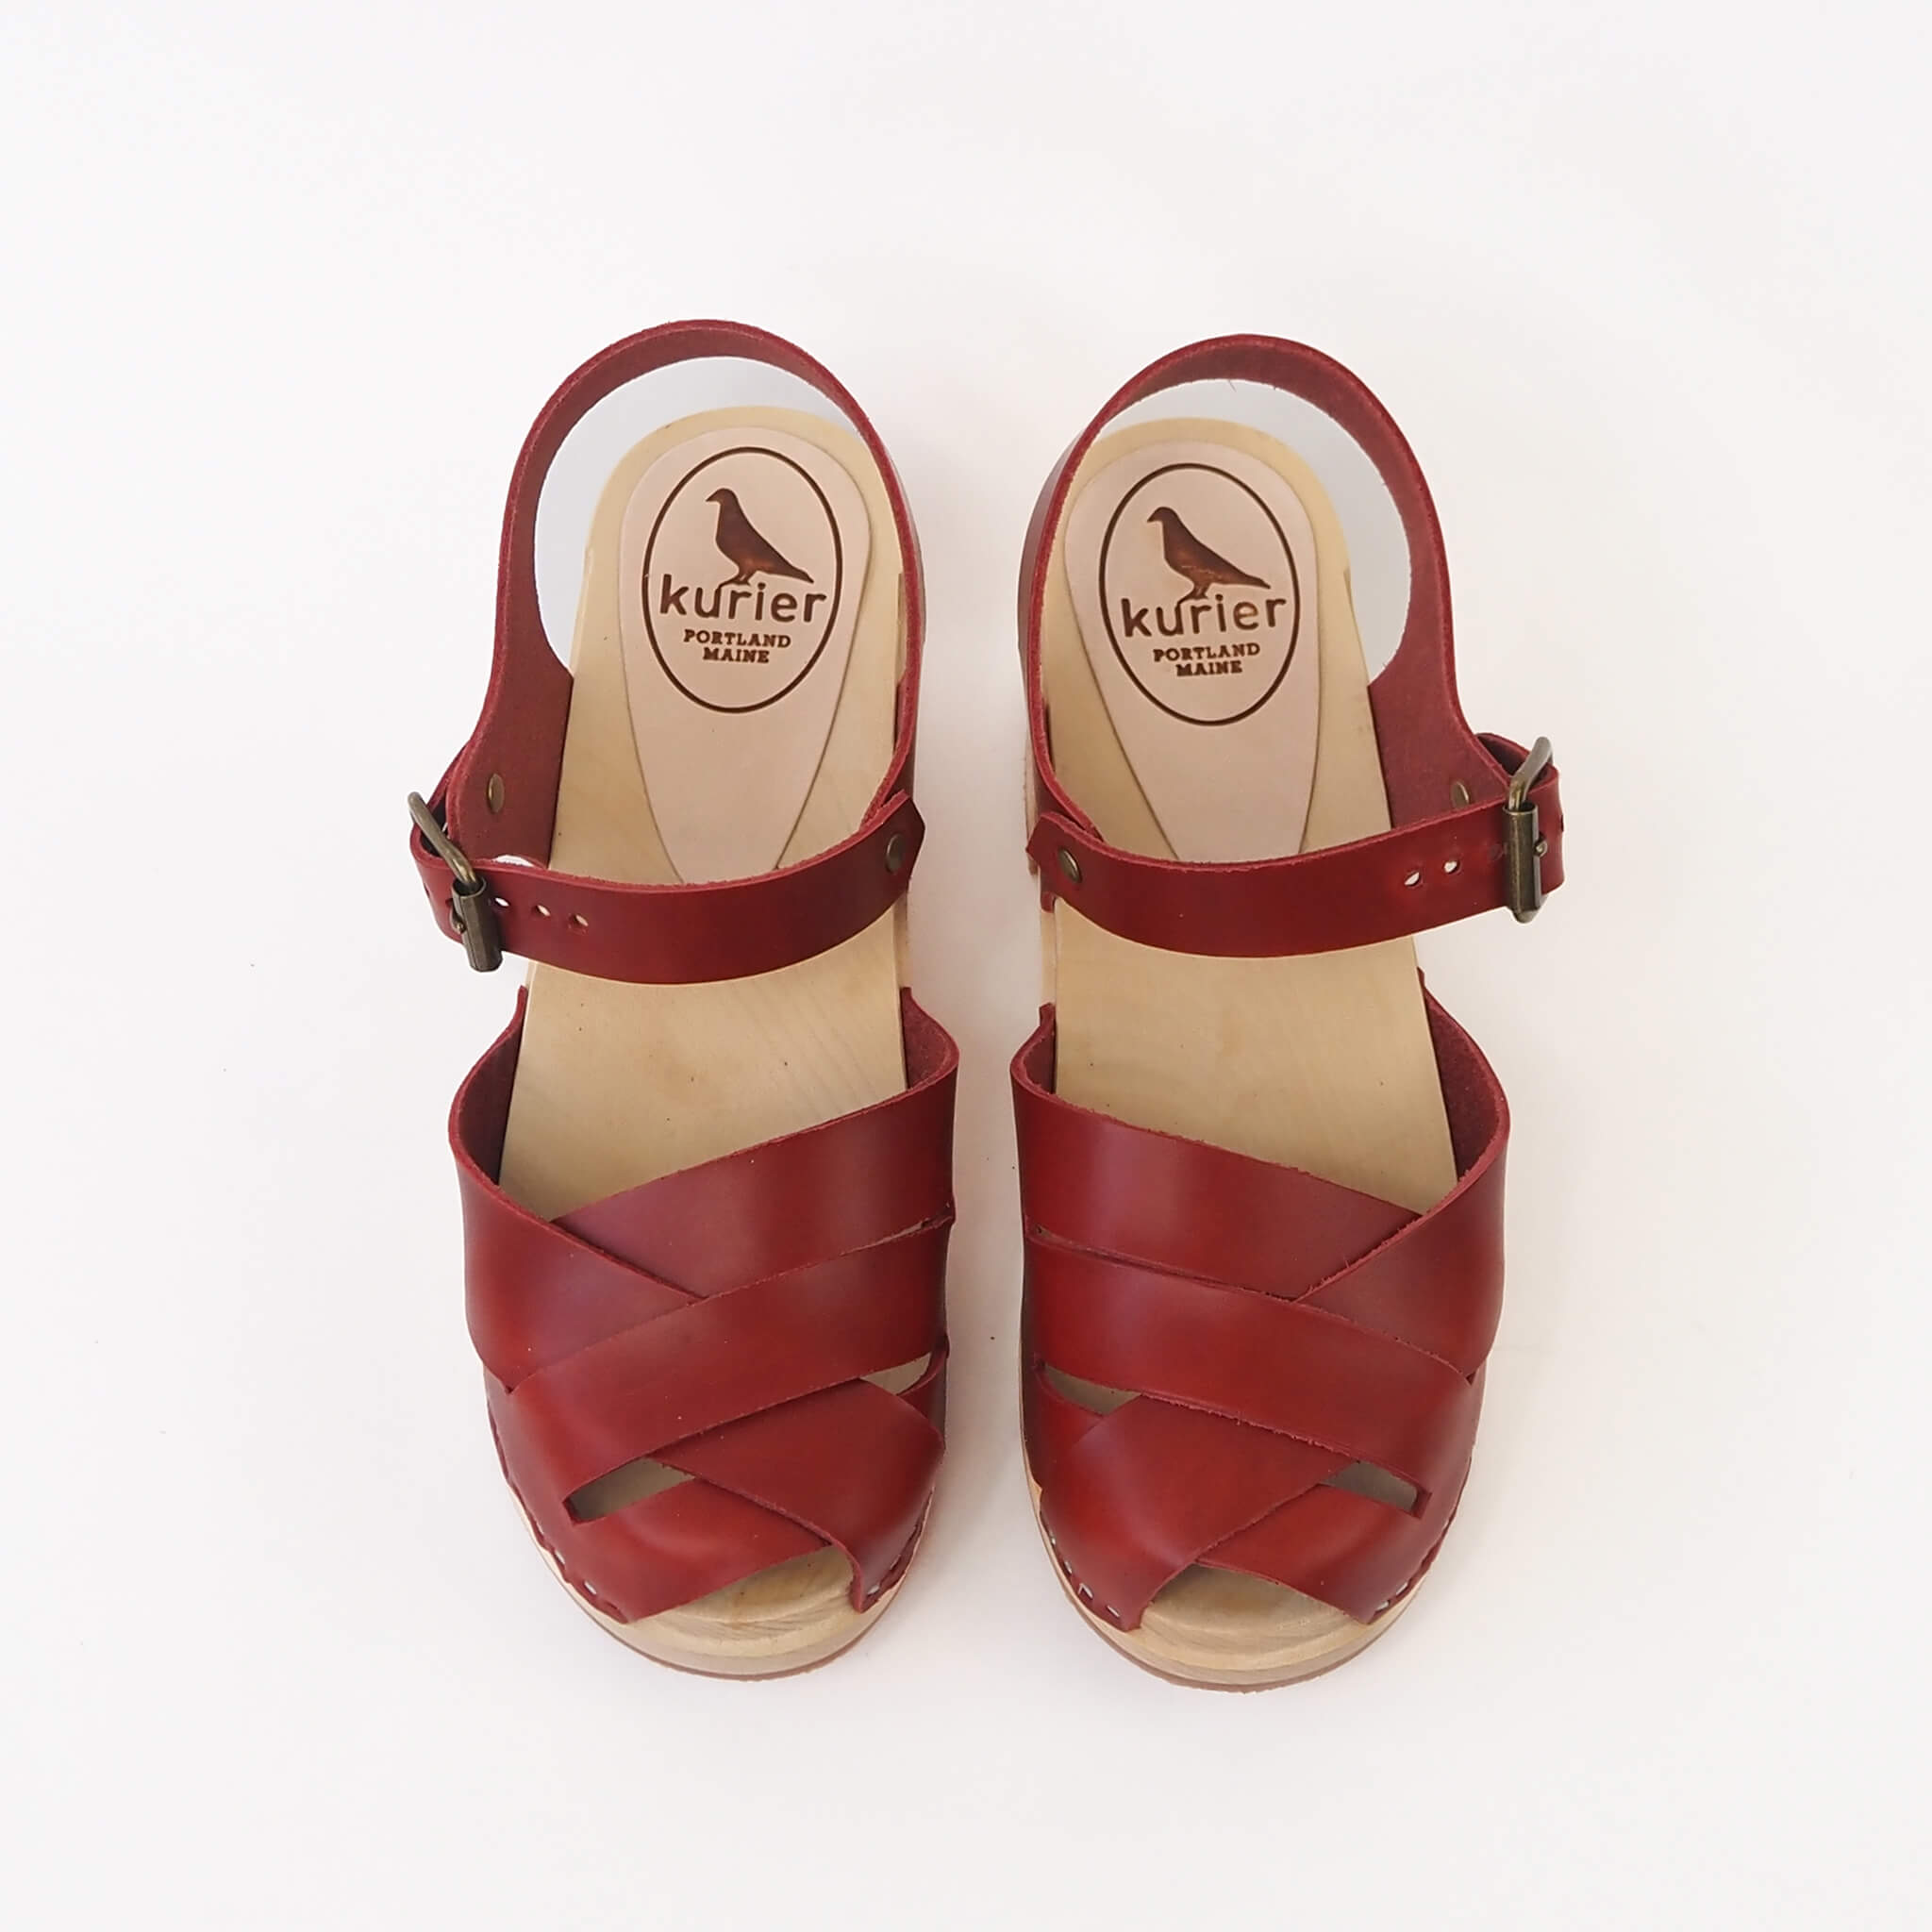 emelia clog high heel peep toe mary janesandal handmade american leather wood - cherry top view